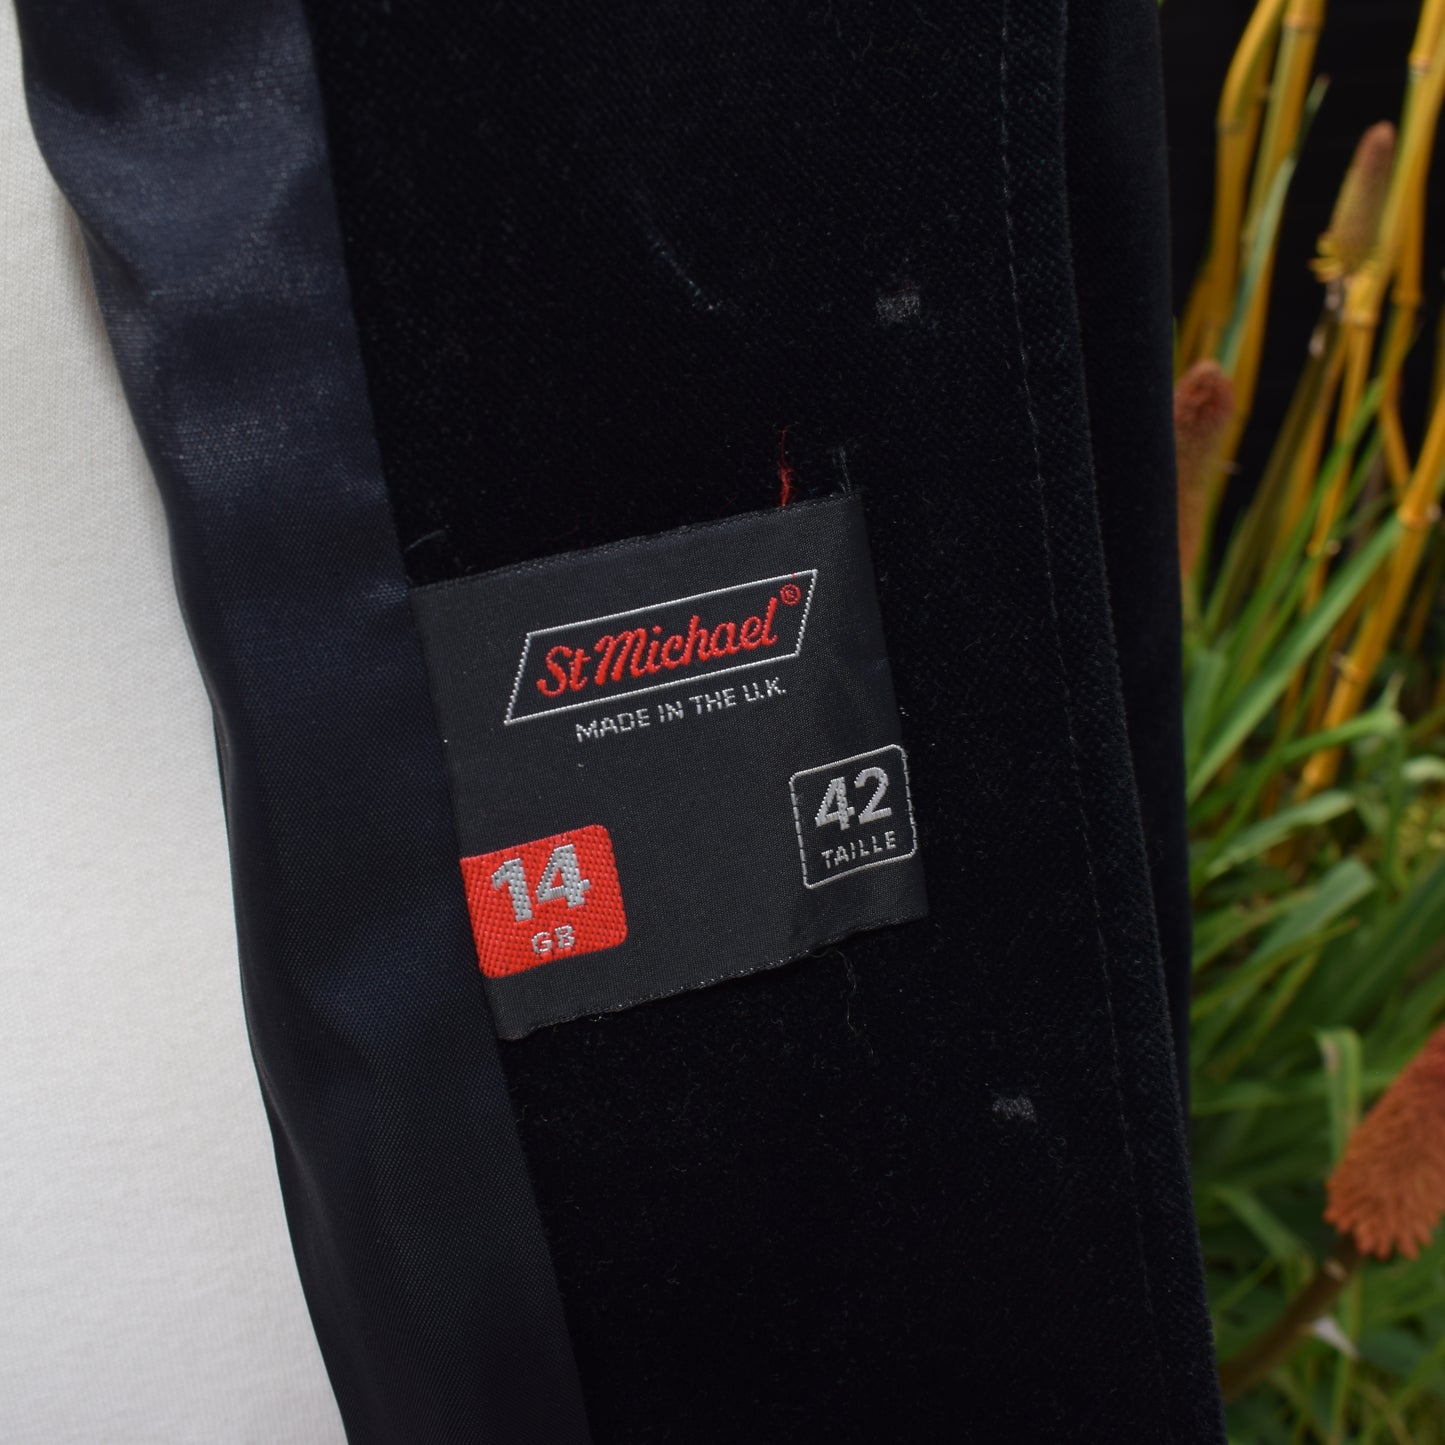 Vintage 1980s Velvet Jacket - Black Size 12